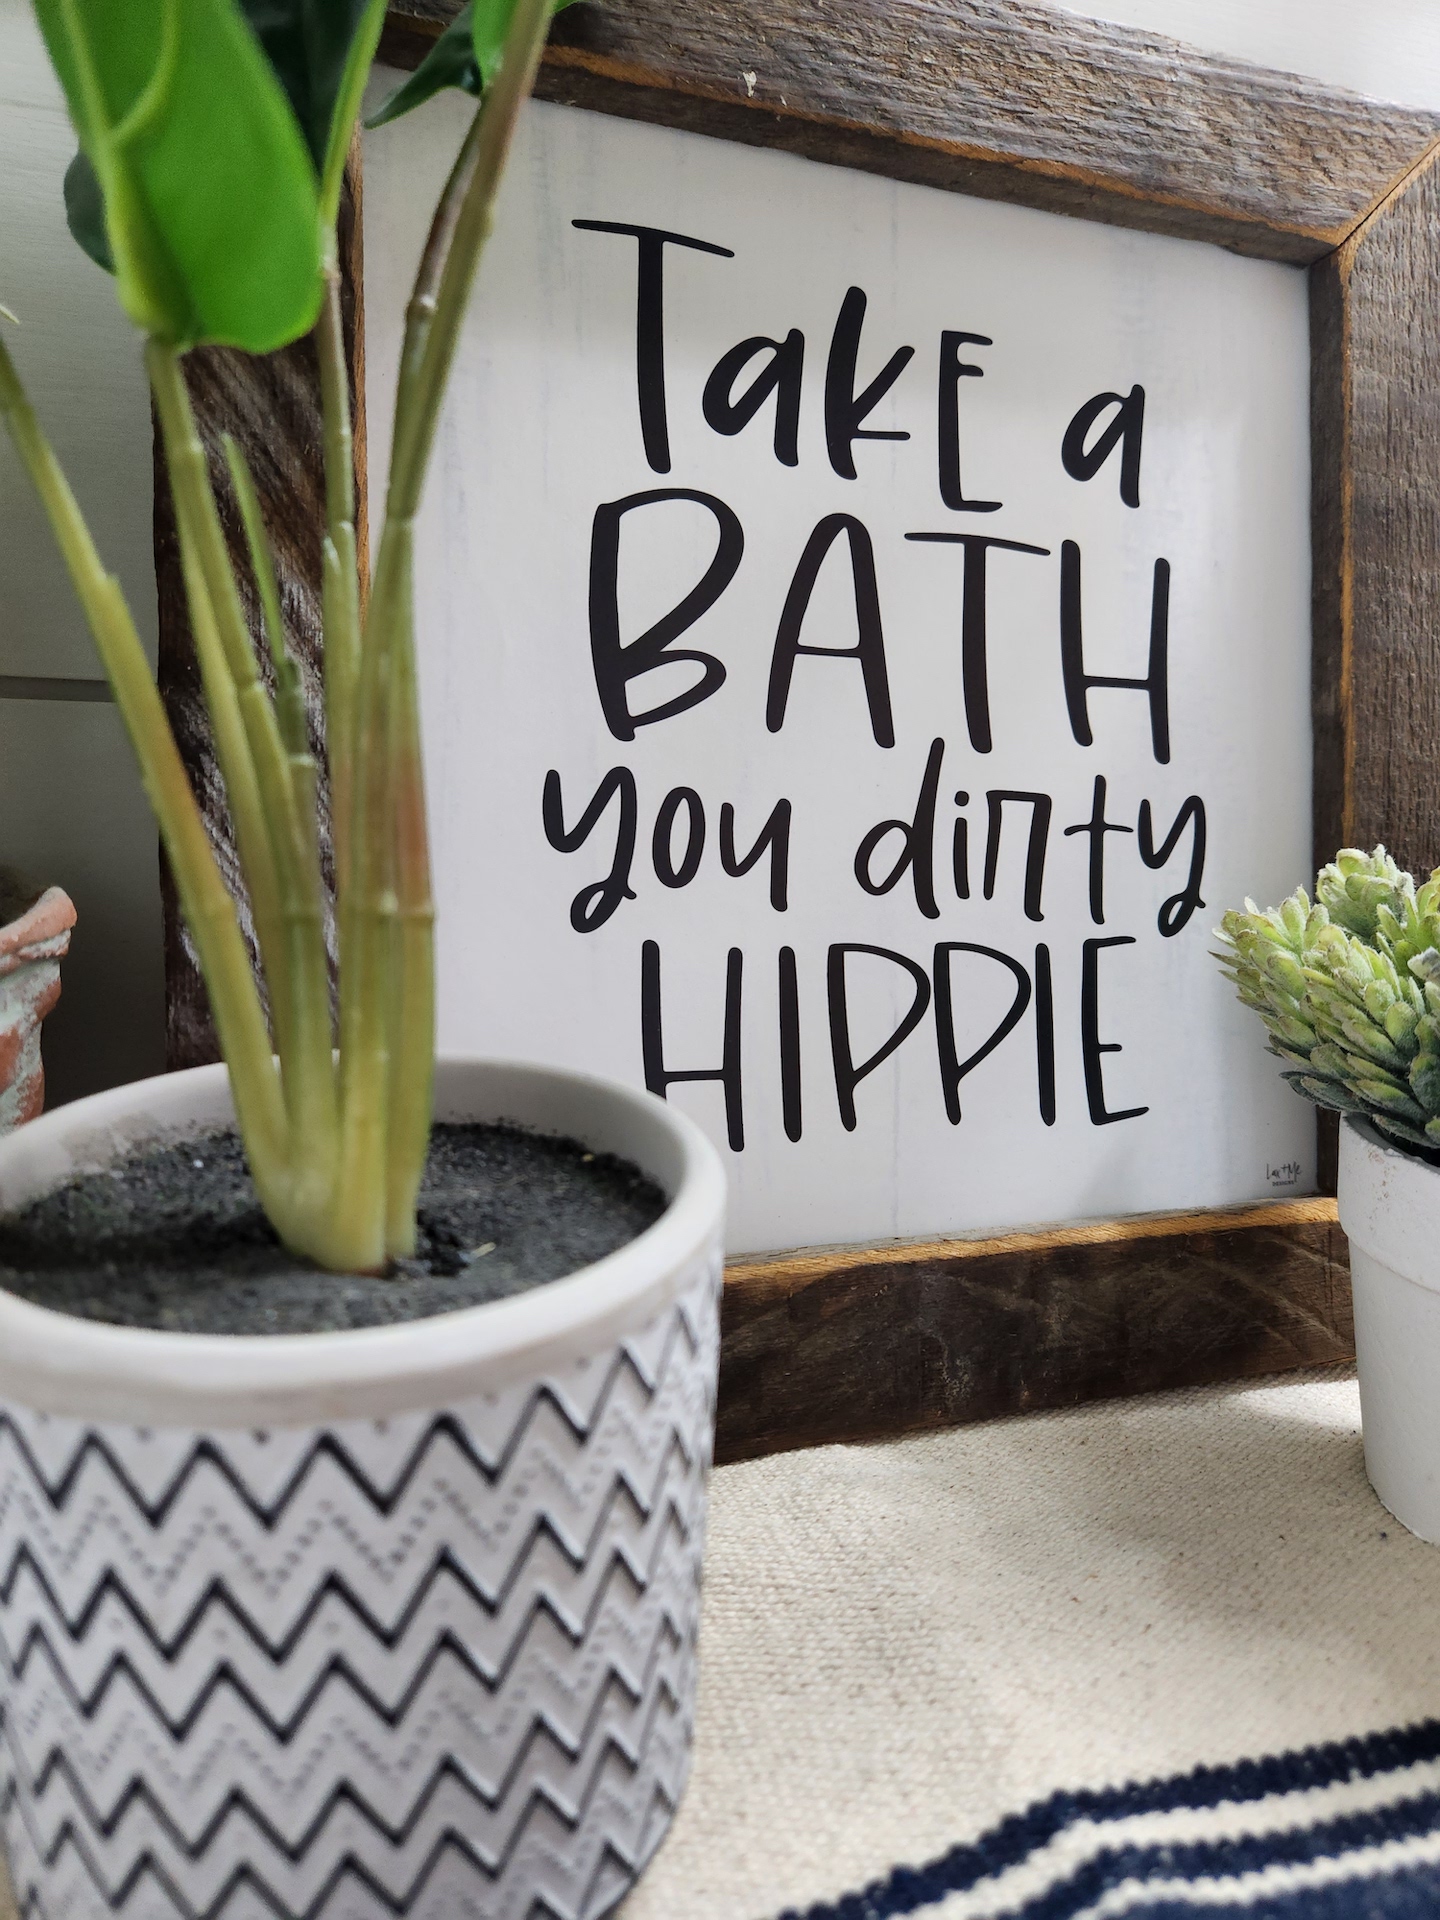 Bath time Hippie lath print